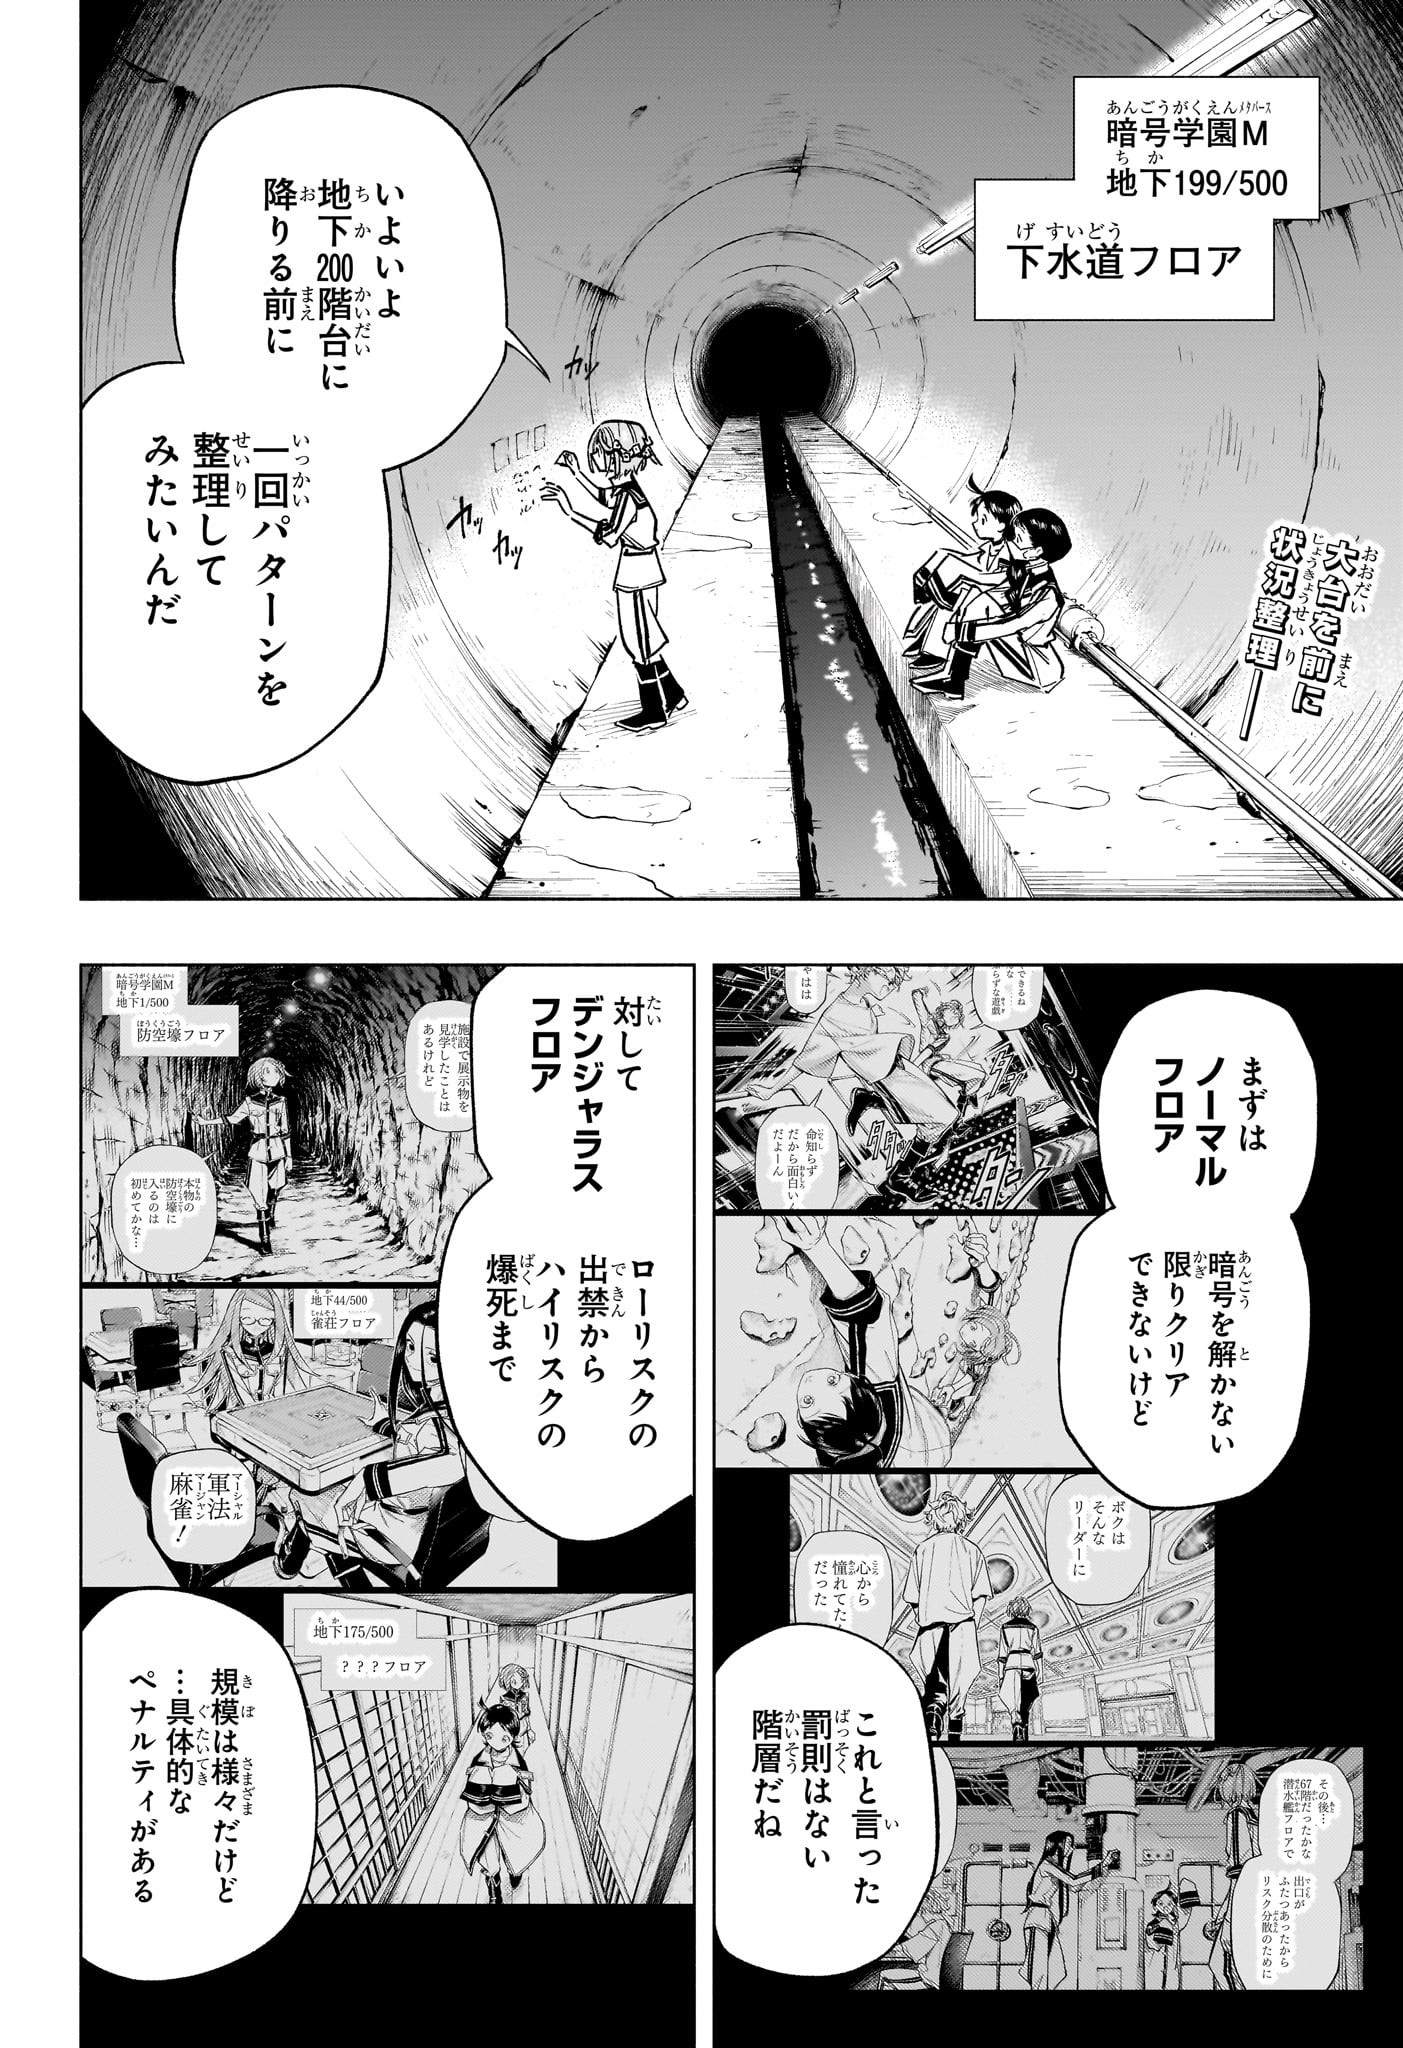 Angou Gakuen no Iroha - Chapter 53 - Page 2